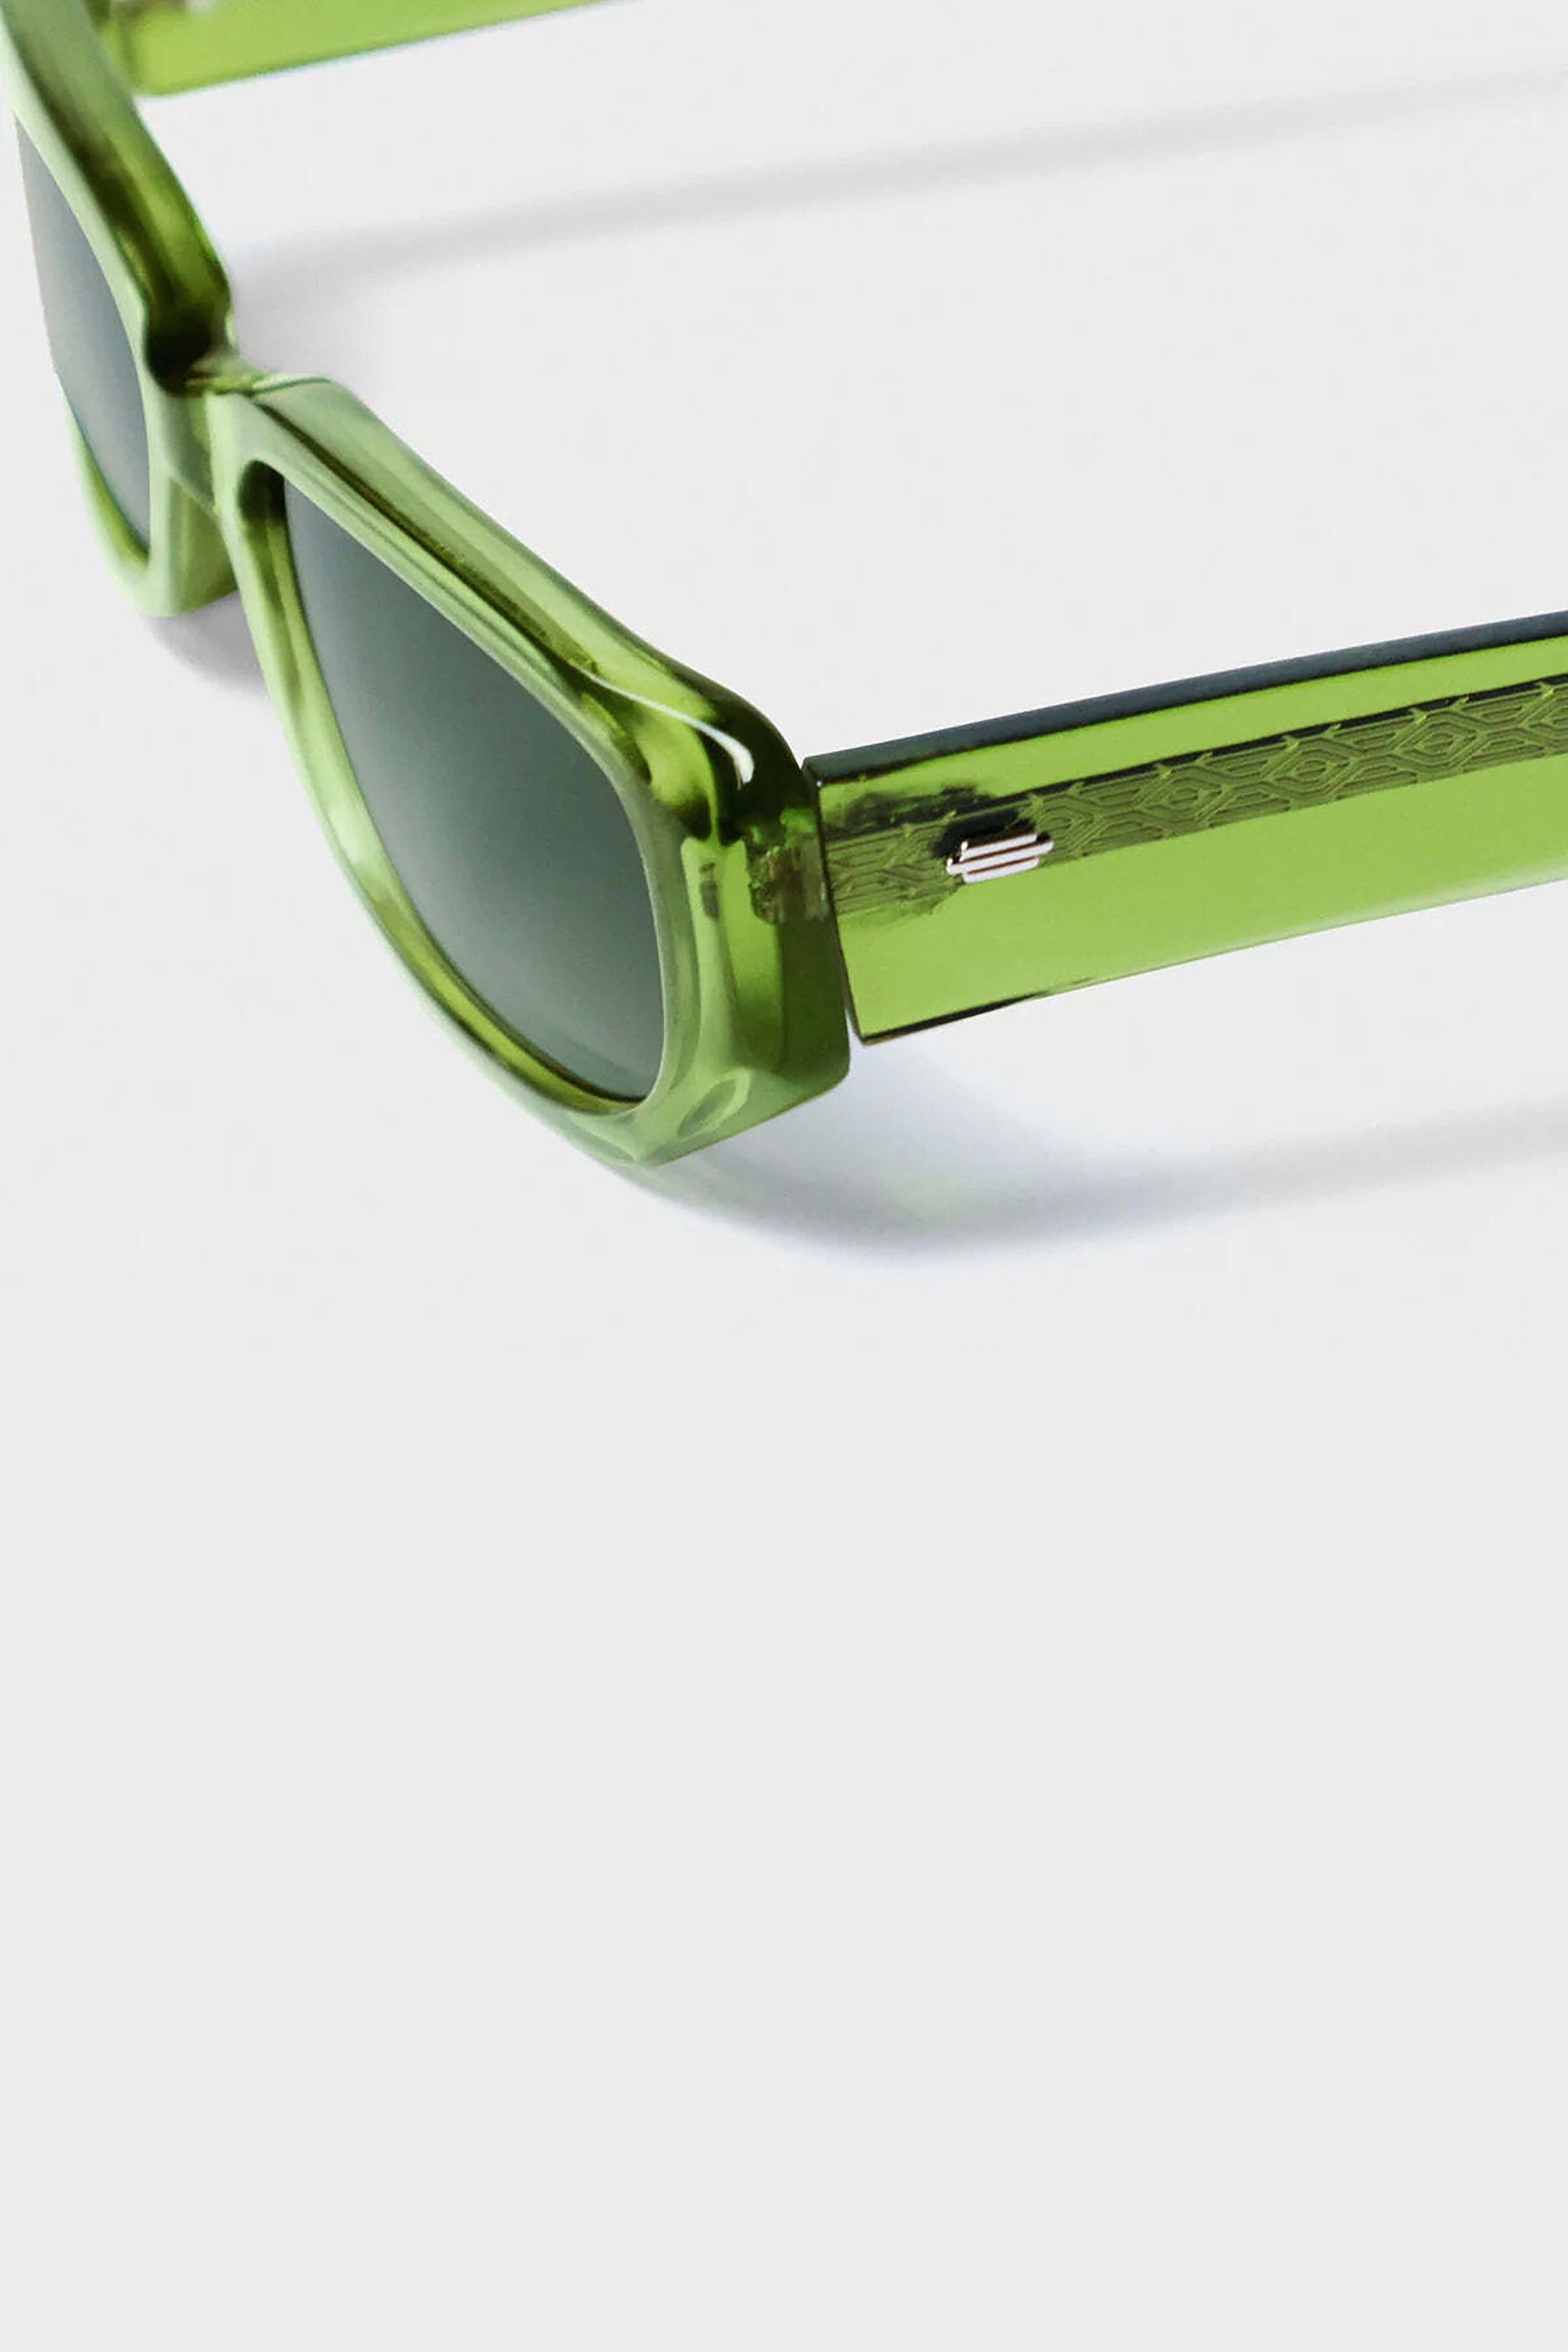 Oré Sunglasses in Olive Green